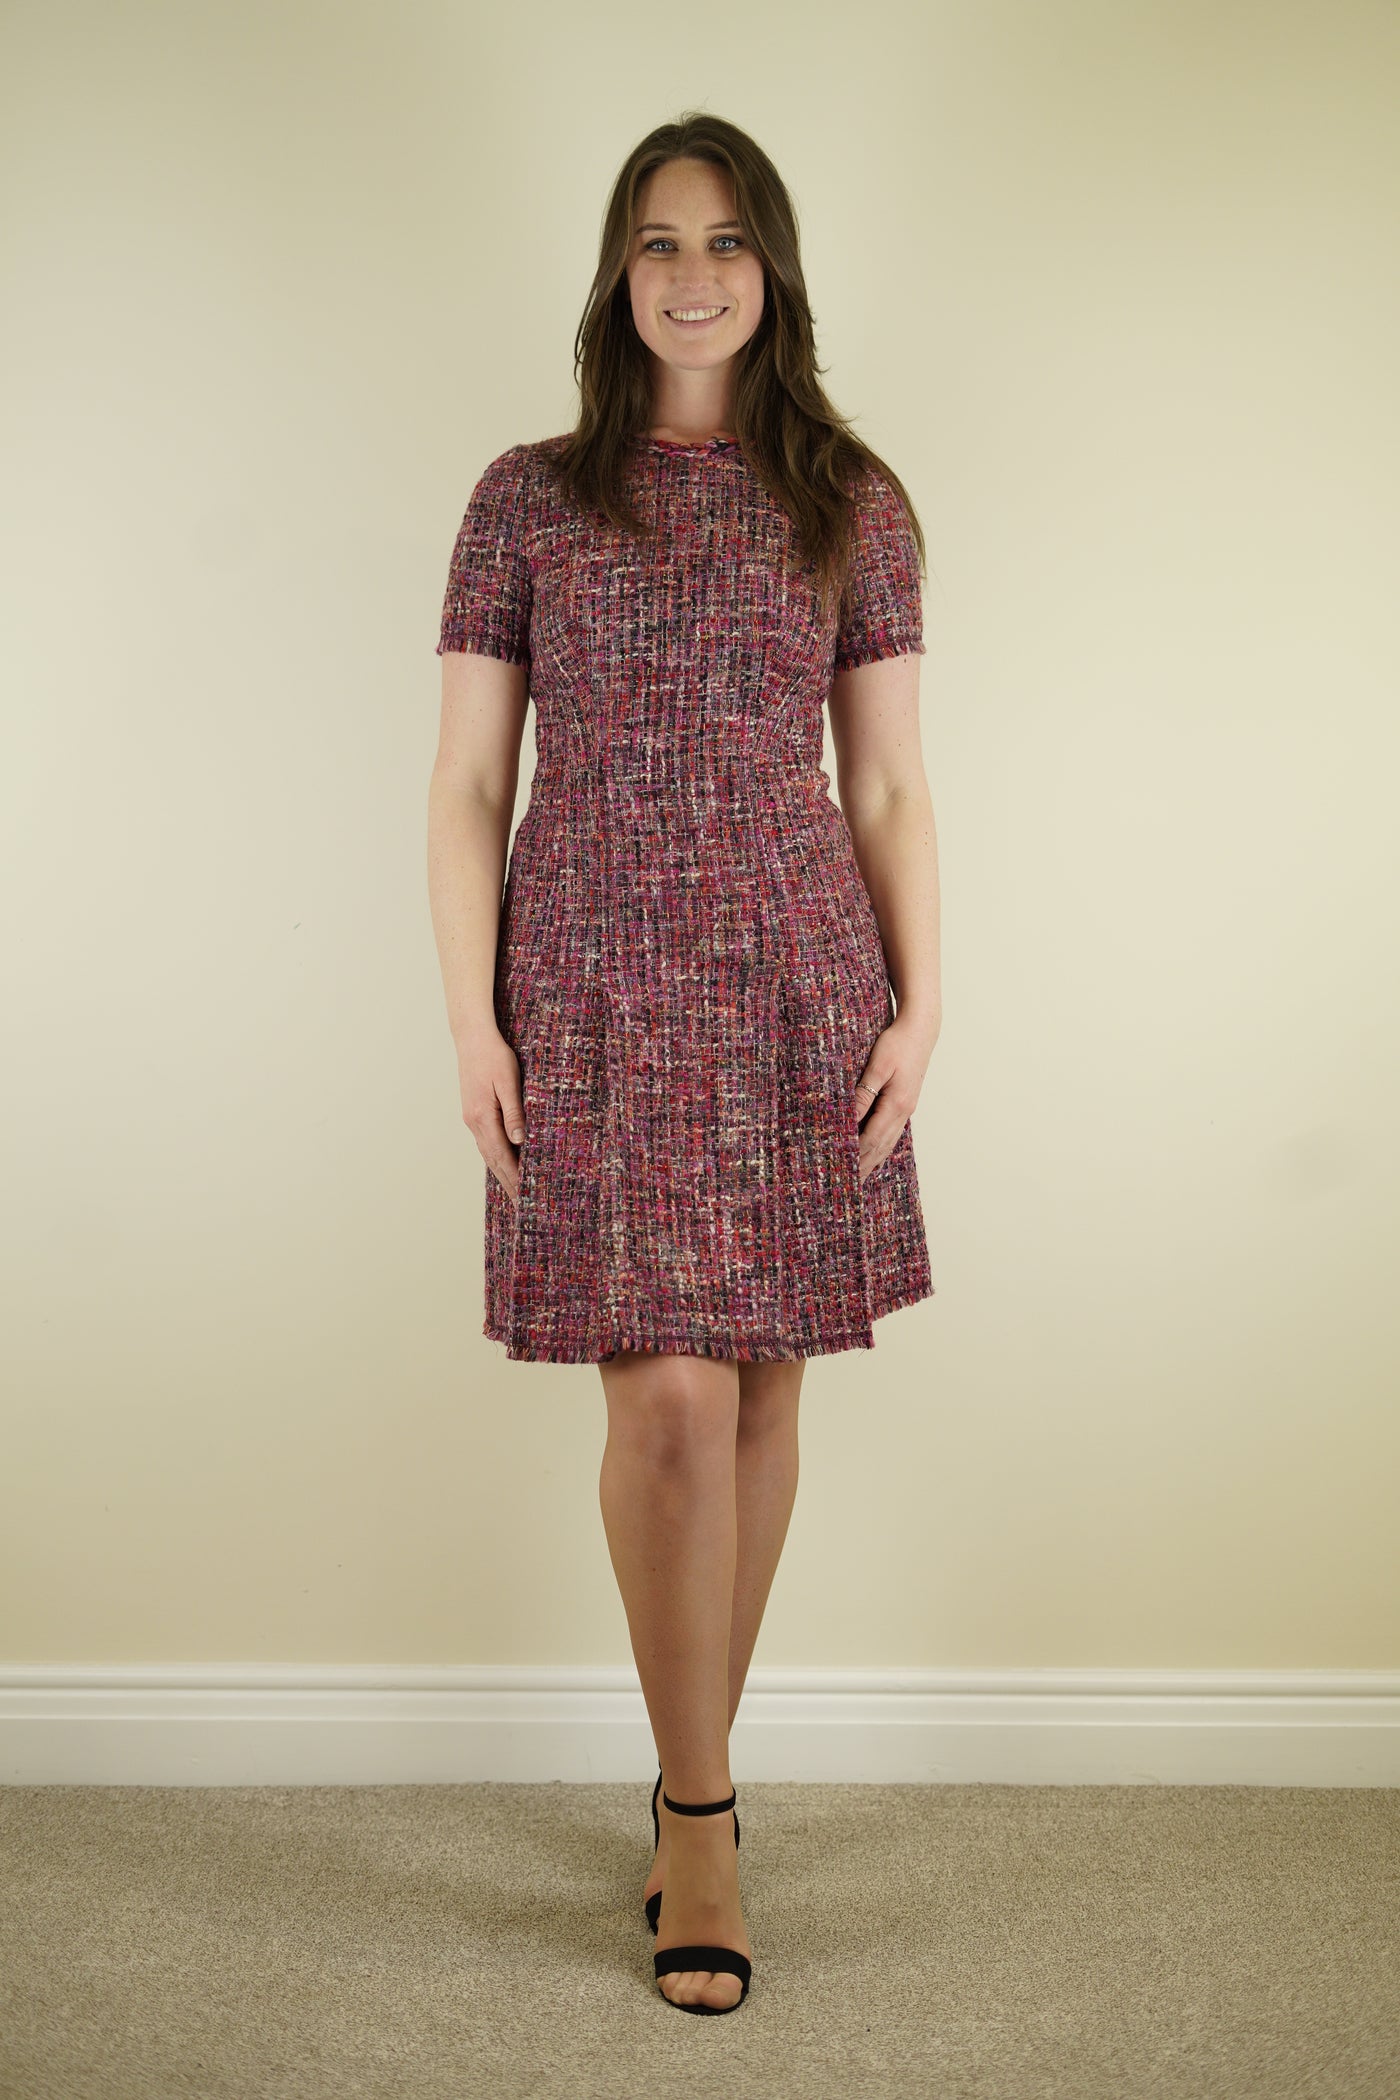 Brand new pink Escada tweed dress size 36 RTP £799